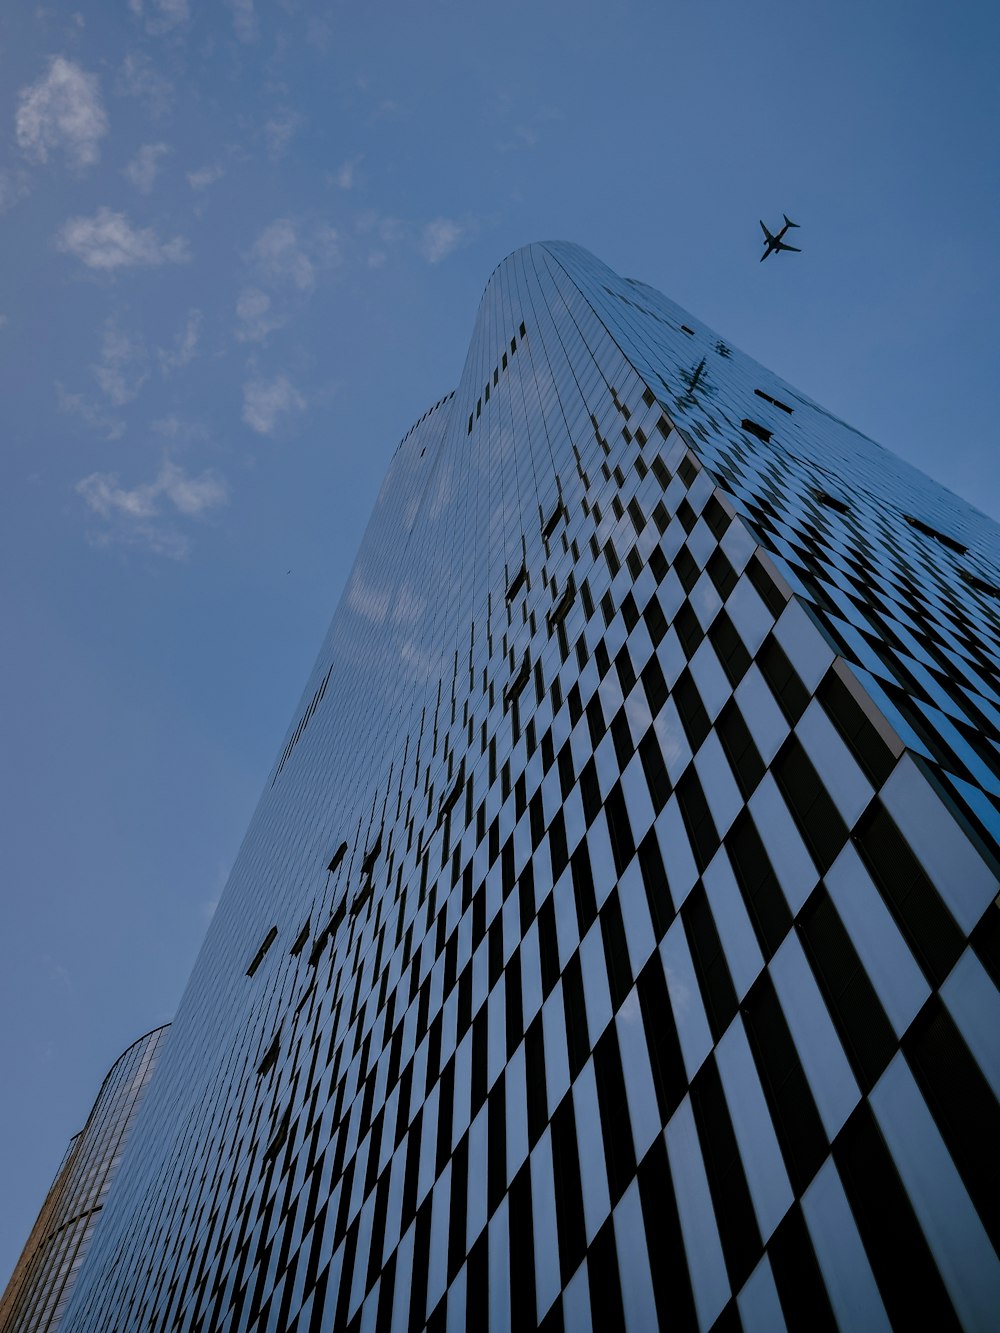 Un aereo che sorvola un edificio alto con un design a scacchiera